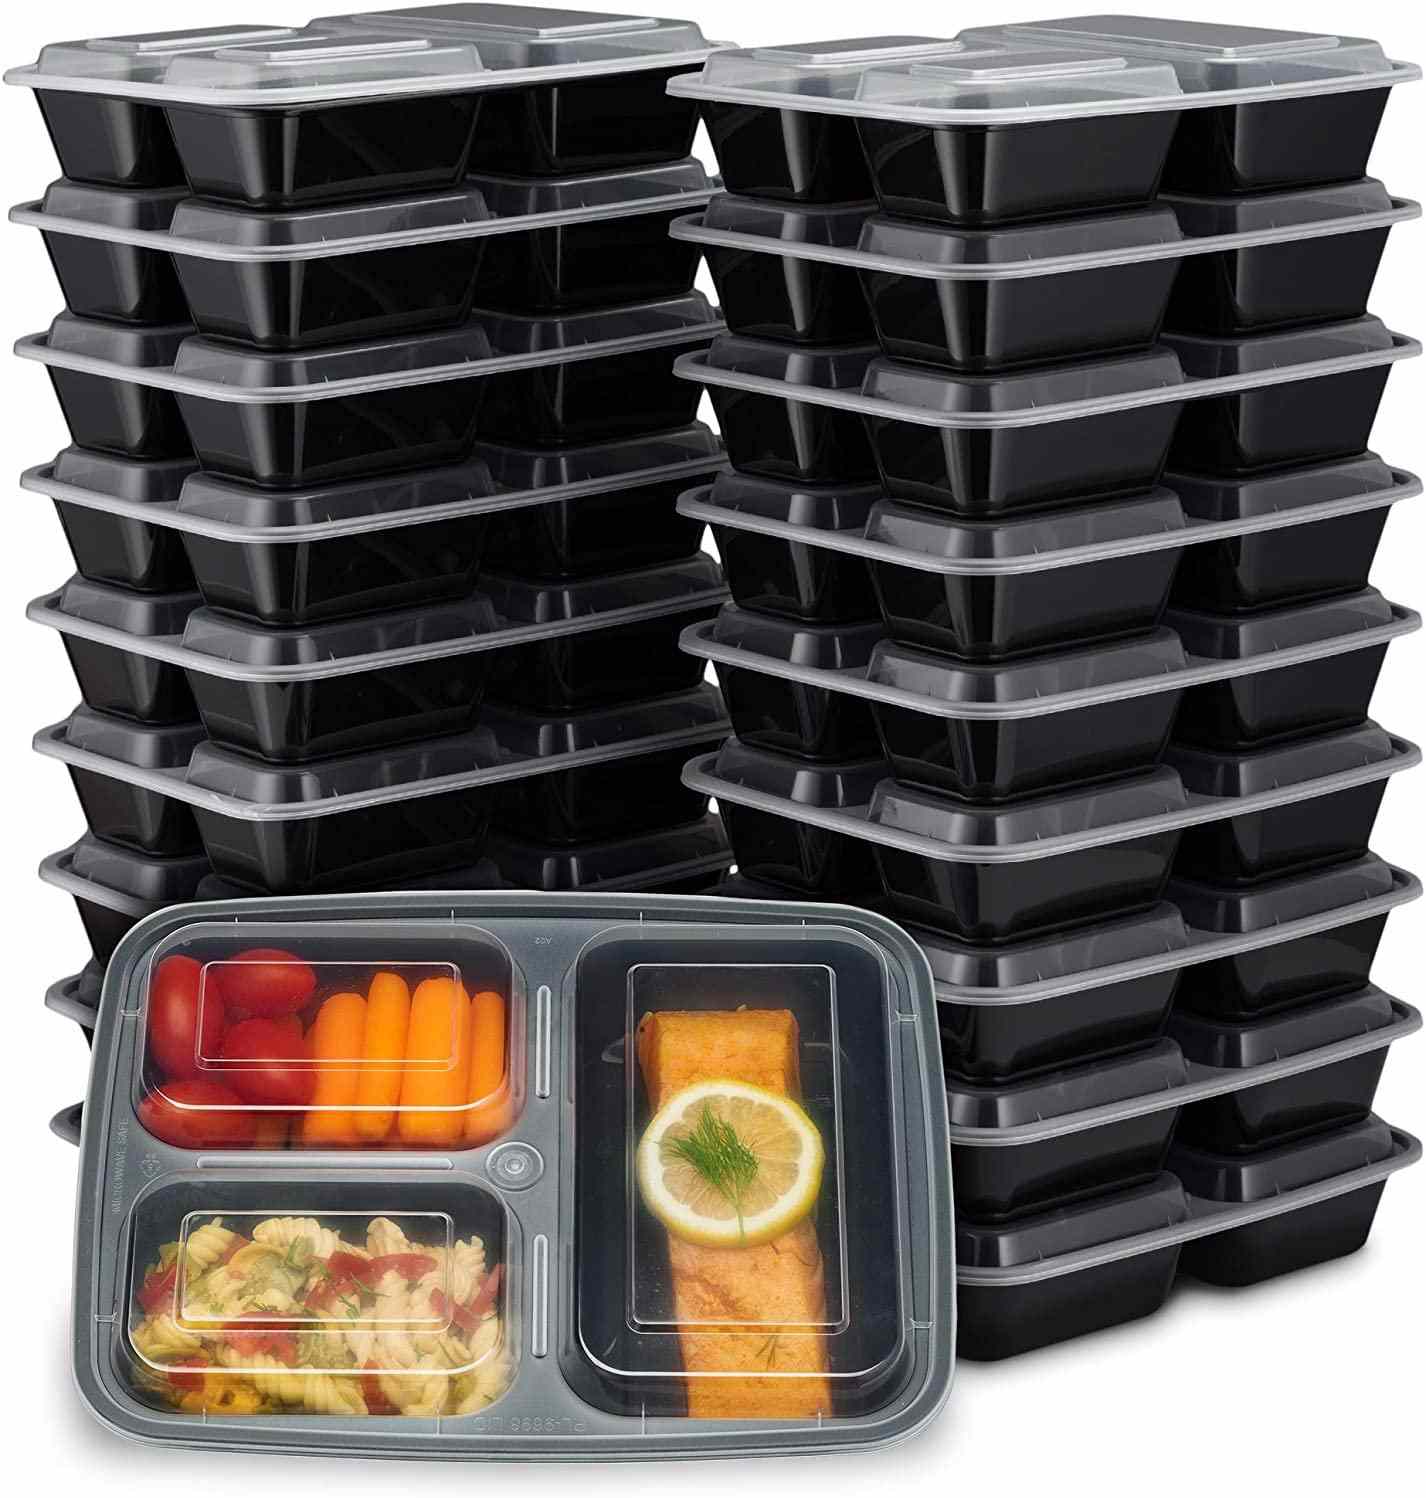 EZ Prepa Meal Prep Containers met deksels - Bento Box